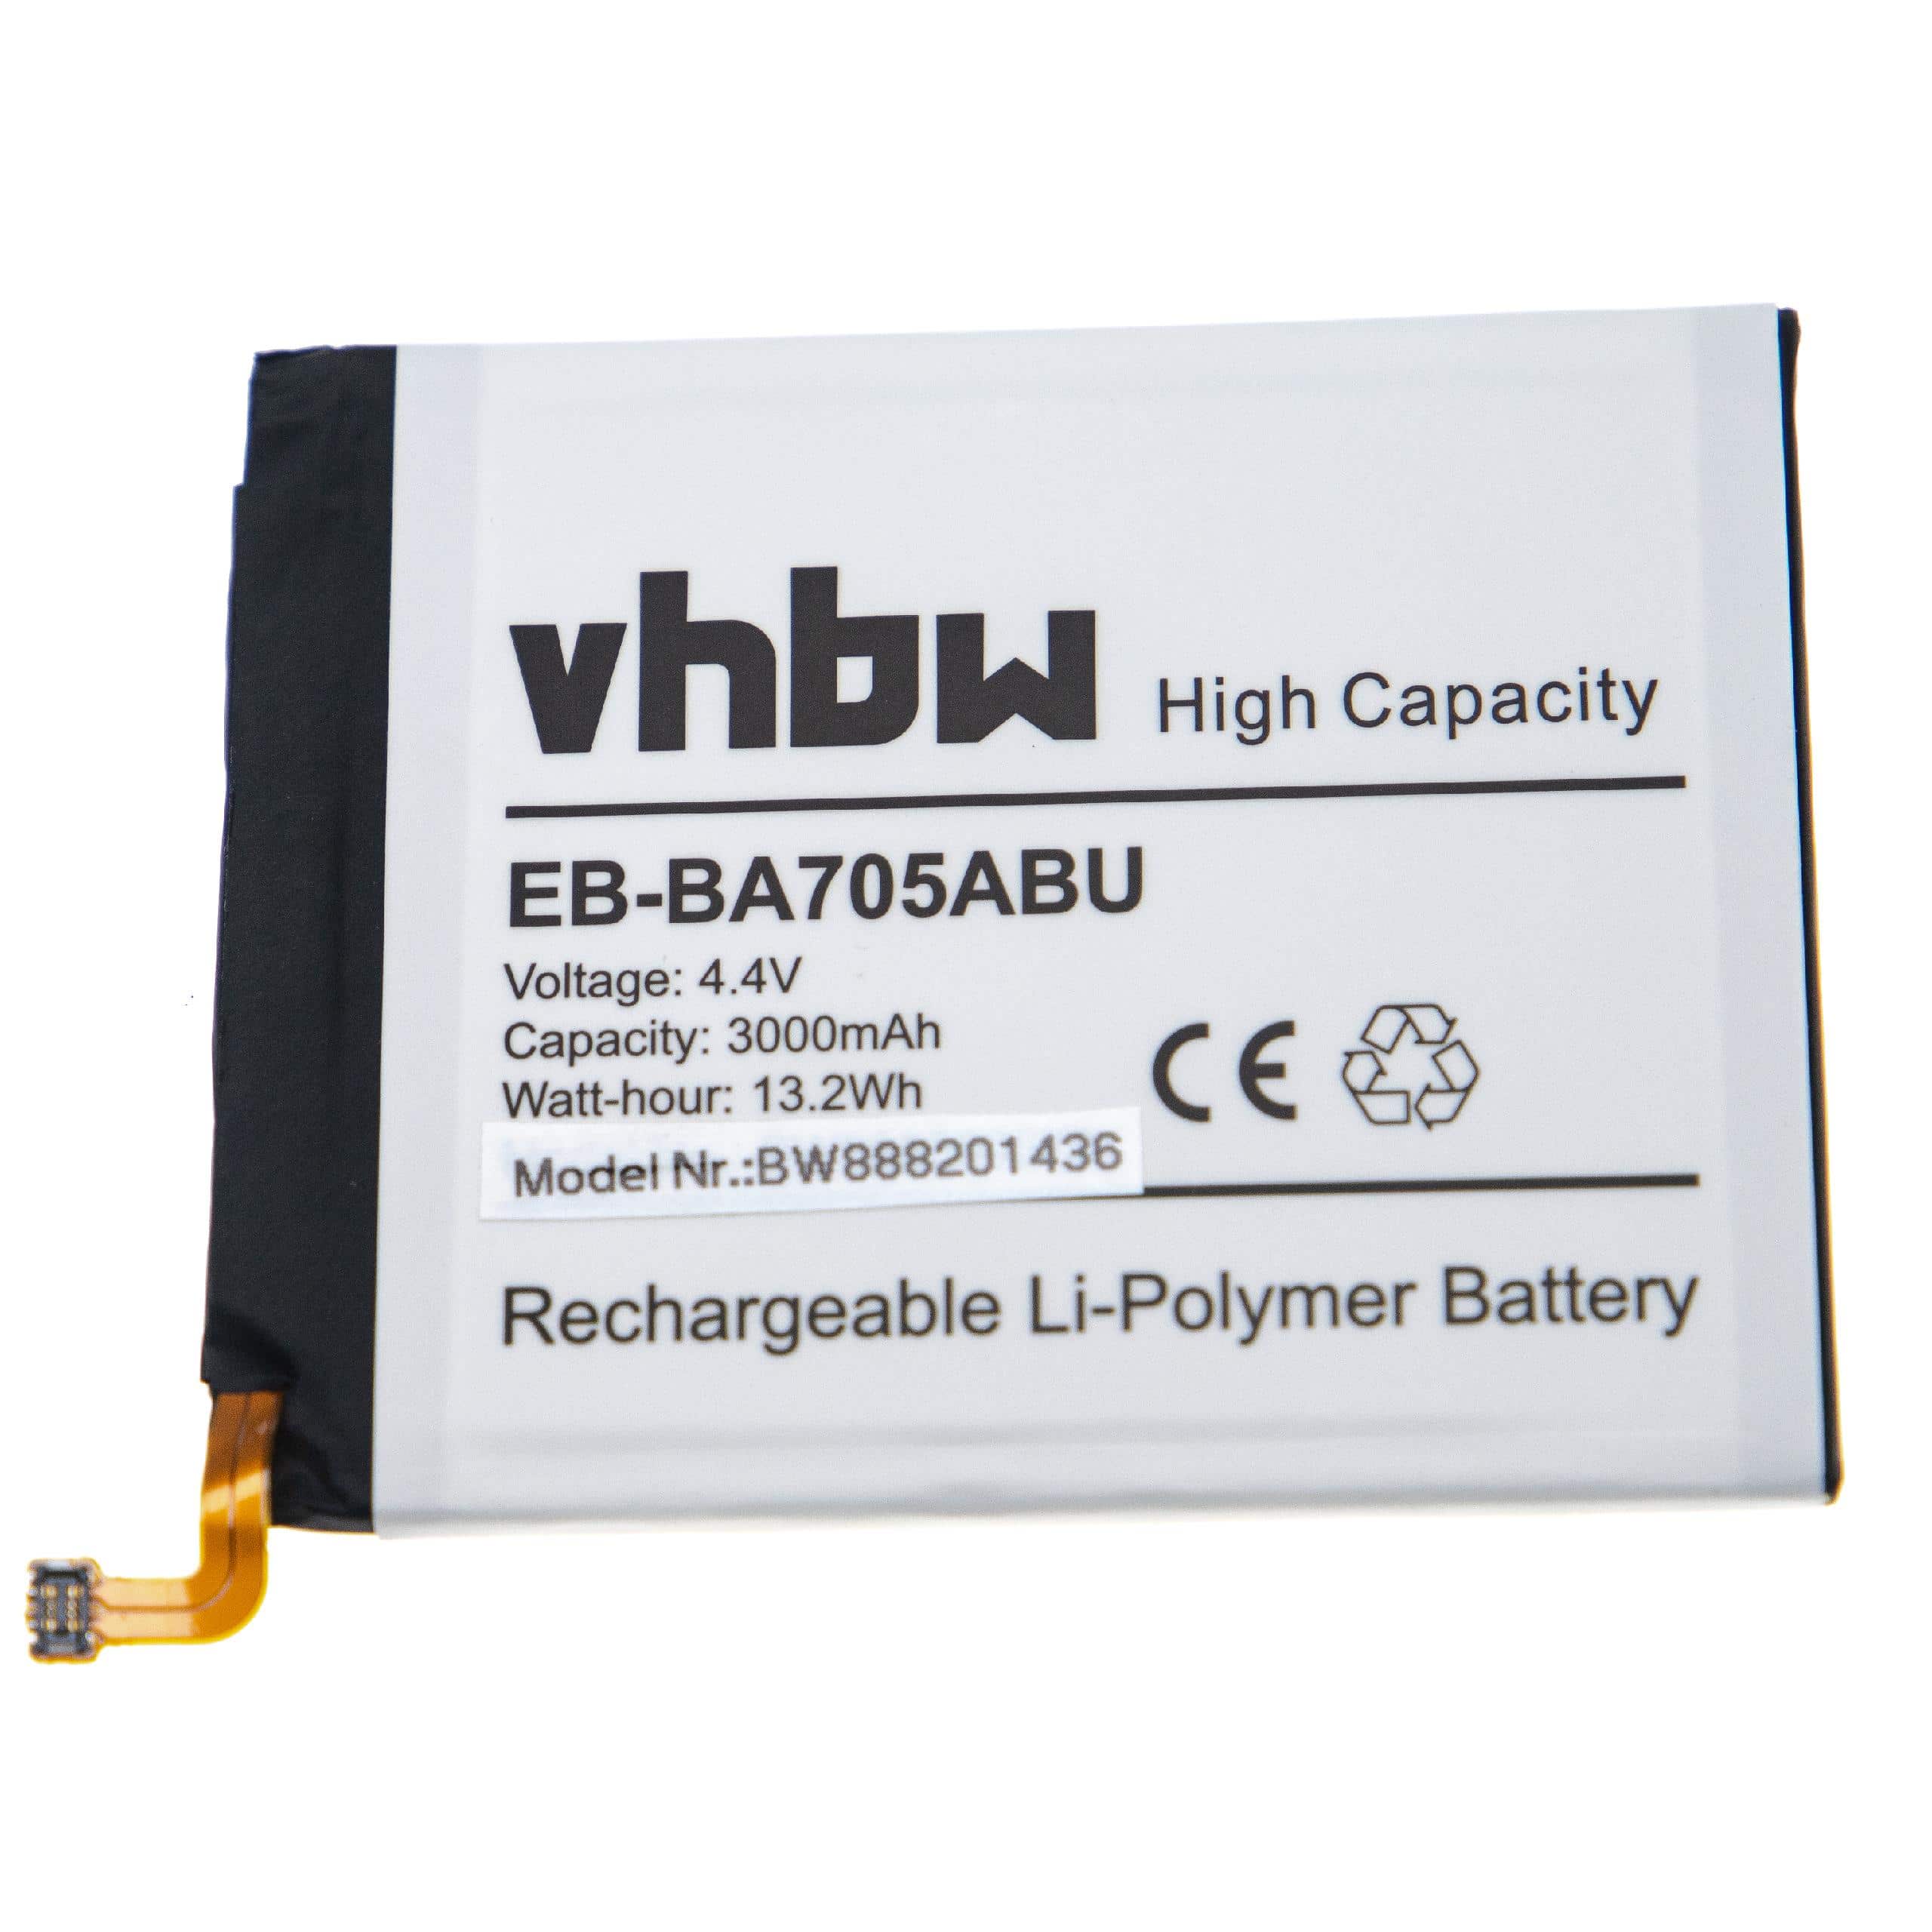 Mobile Phone Battery Replacement for Samsung GH82-19746A, EB-BA705ABU - 3000mAh 4.4V Li-polymer